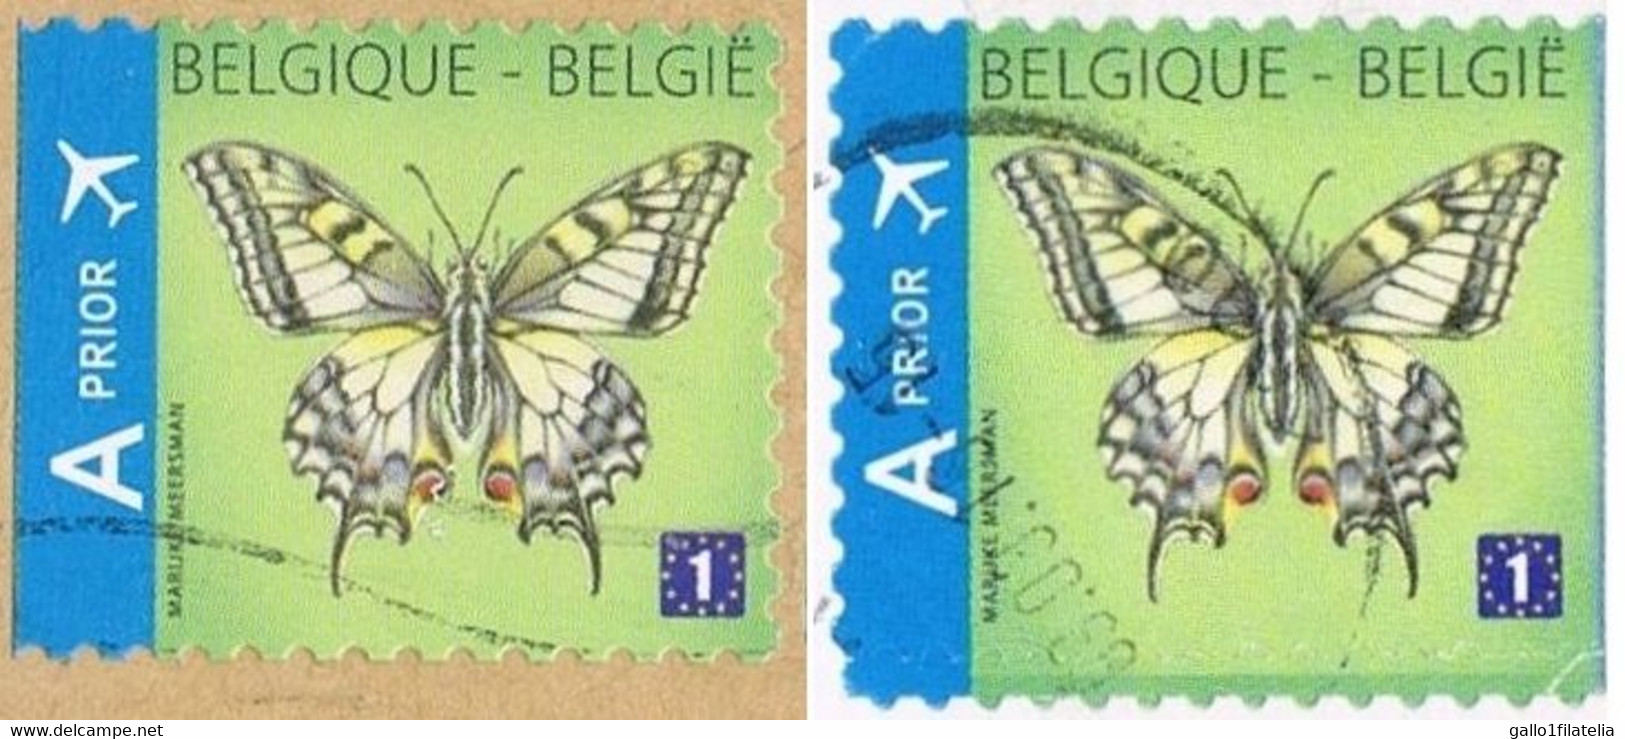 2012 - BELGIO / BELGIUM - FARFALLE / BUTTERFLIES. USATO / USED. - Used Stamps